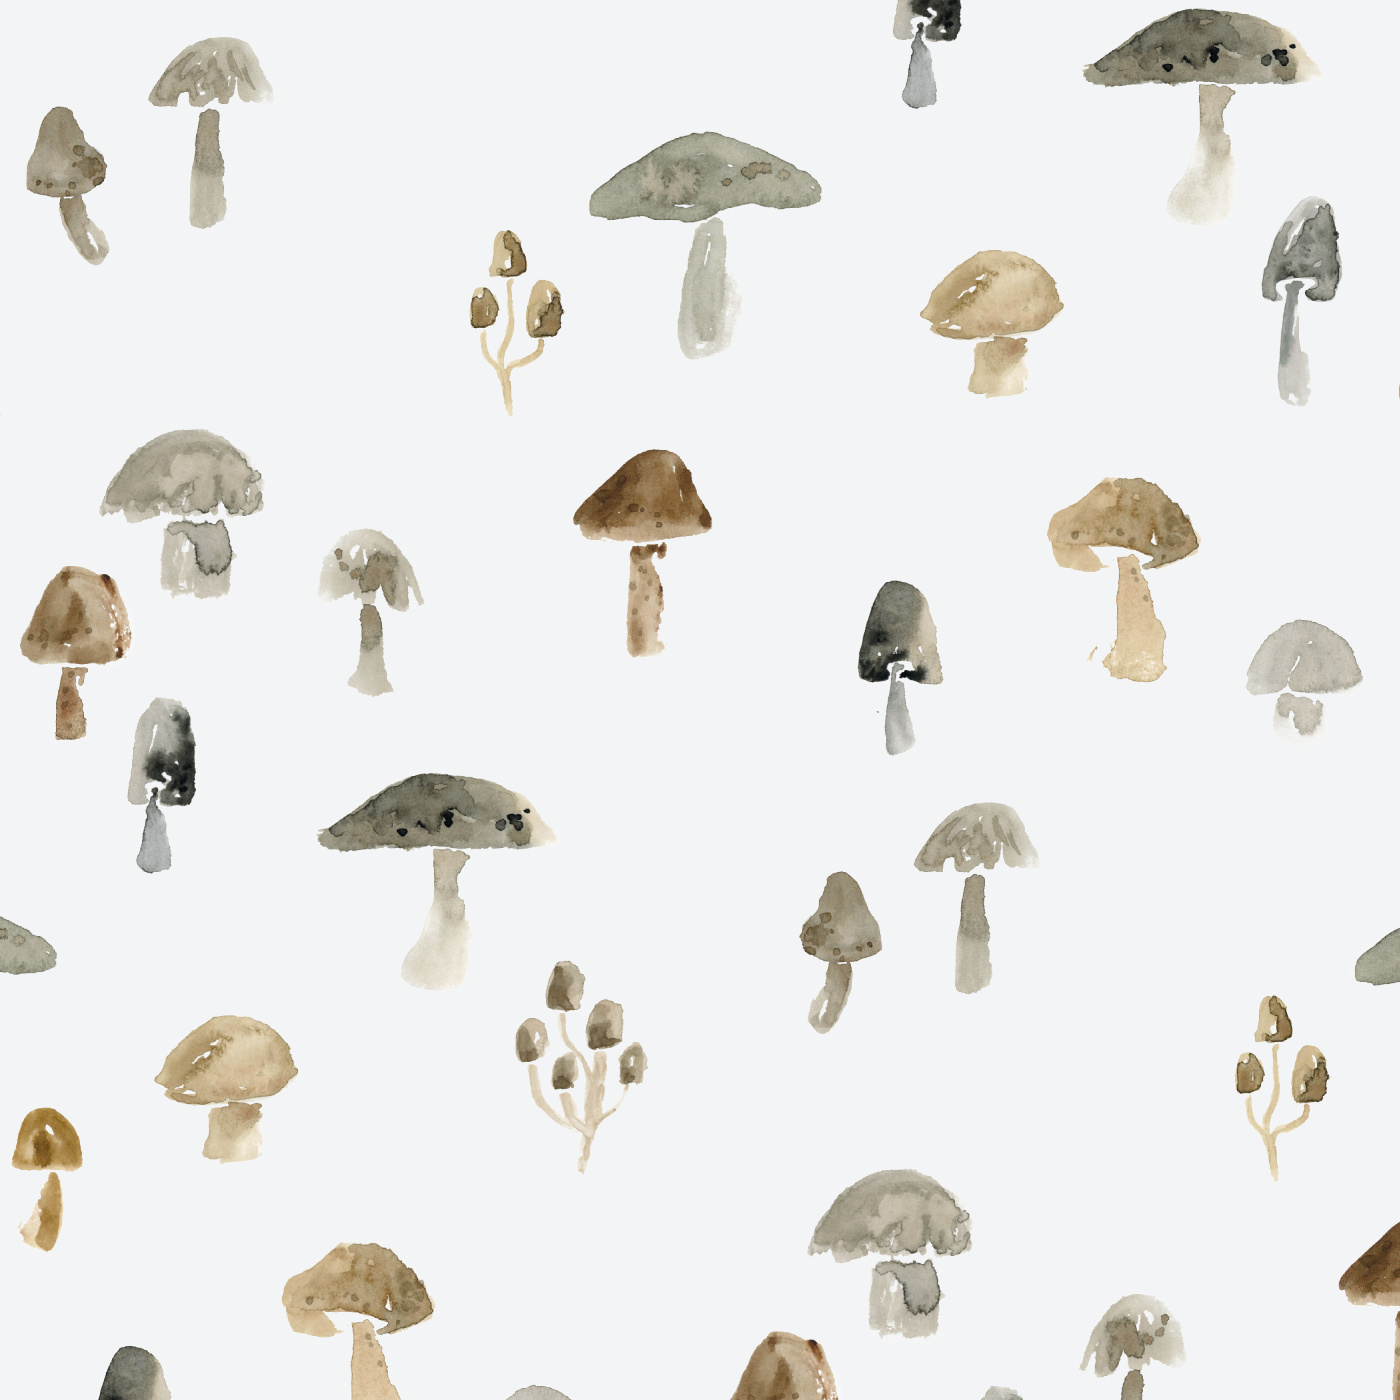 17000 Mushroom Wallpaper Pictures